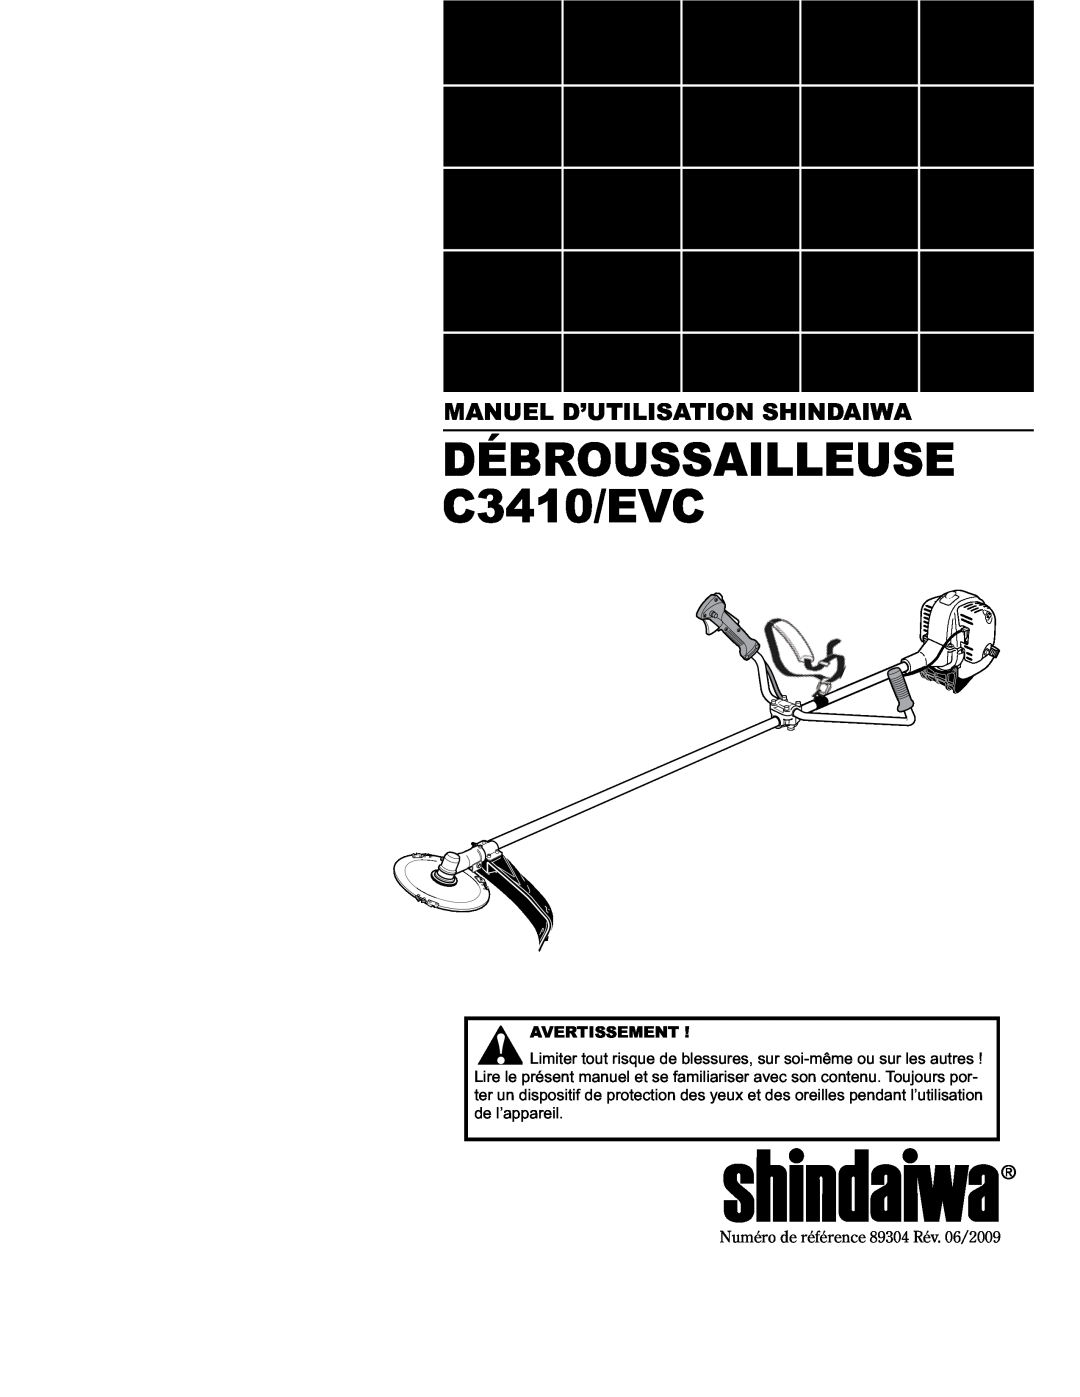 Shindaiwa 89304 manual DÉBROUSSAILLEUSE C3410/EVC, Manuel D’Utilisation Shindaiwa, Avertissement 